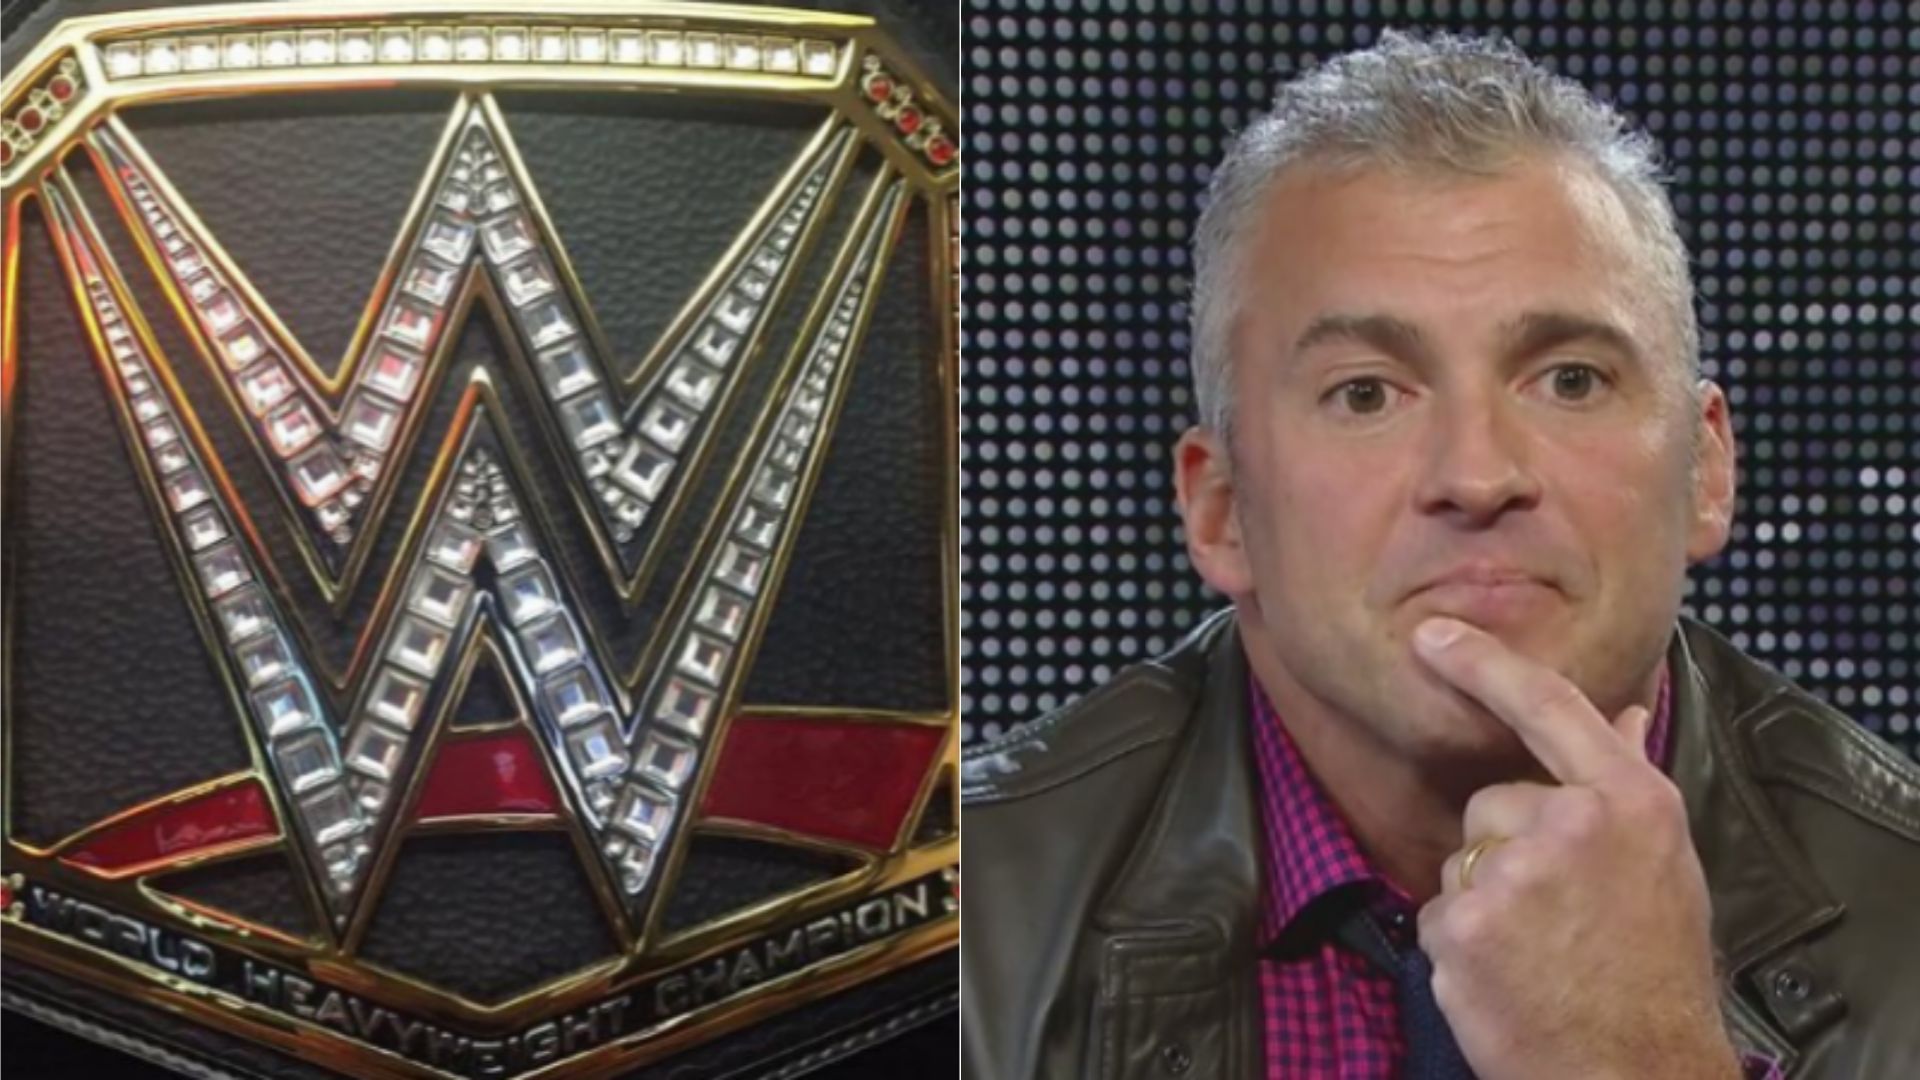 Shane McMahon will seemingly no longer appear on WWE programming